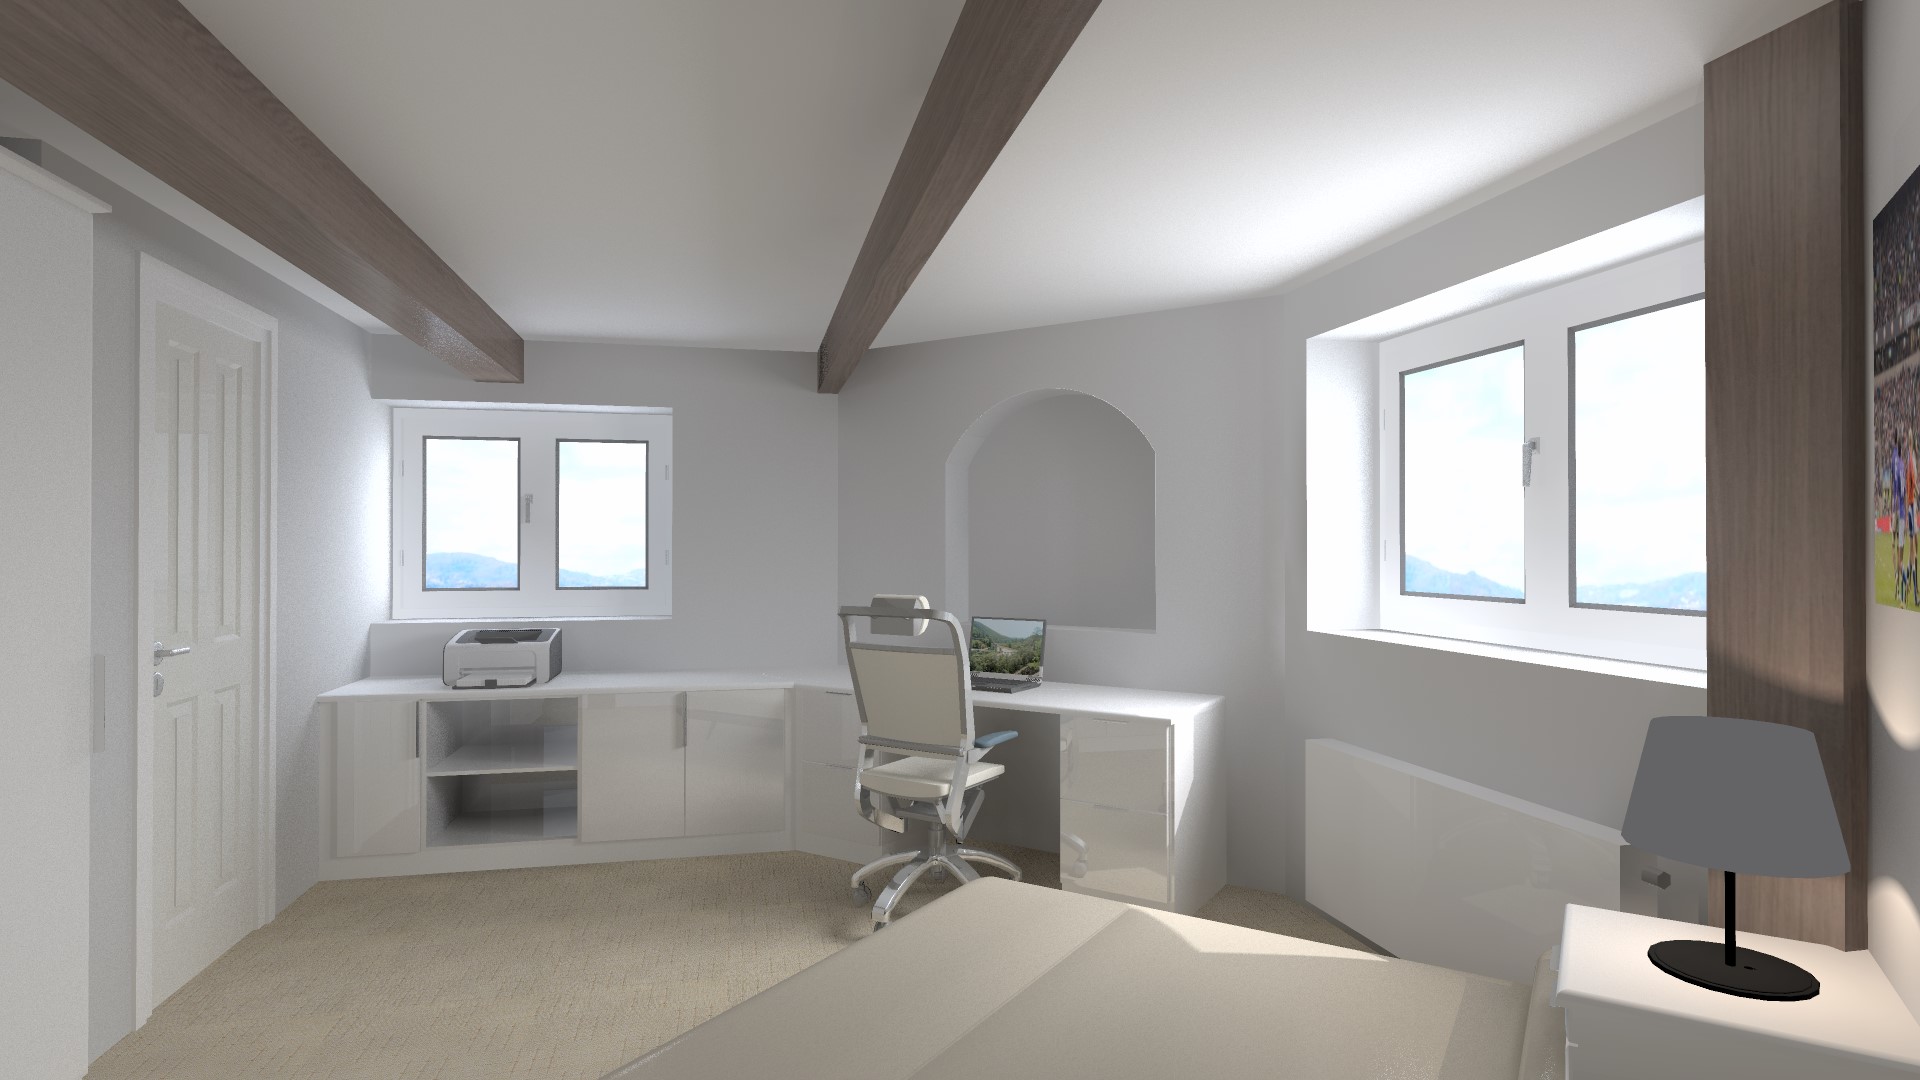 Byles bedroom office design using Hepplewhite furniture created in Winner Design